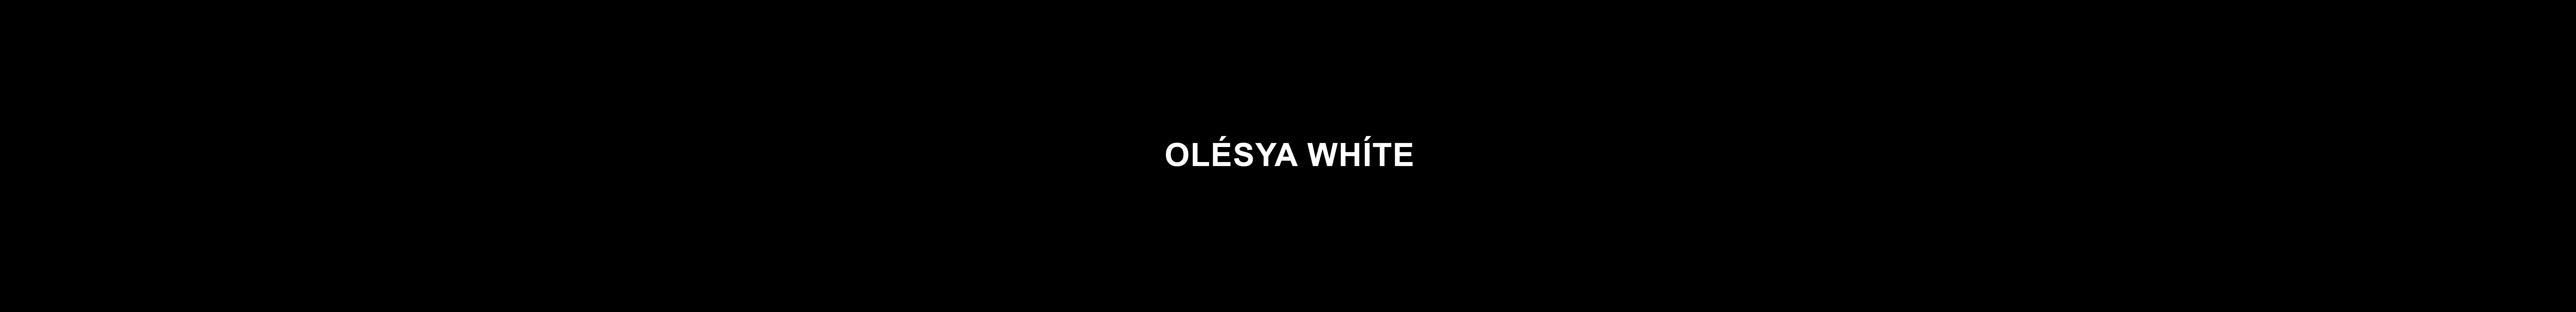 Olesya White's profile banner